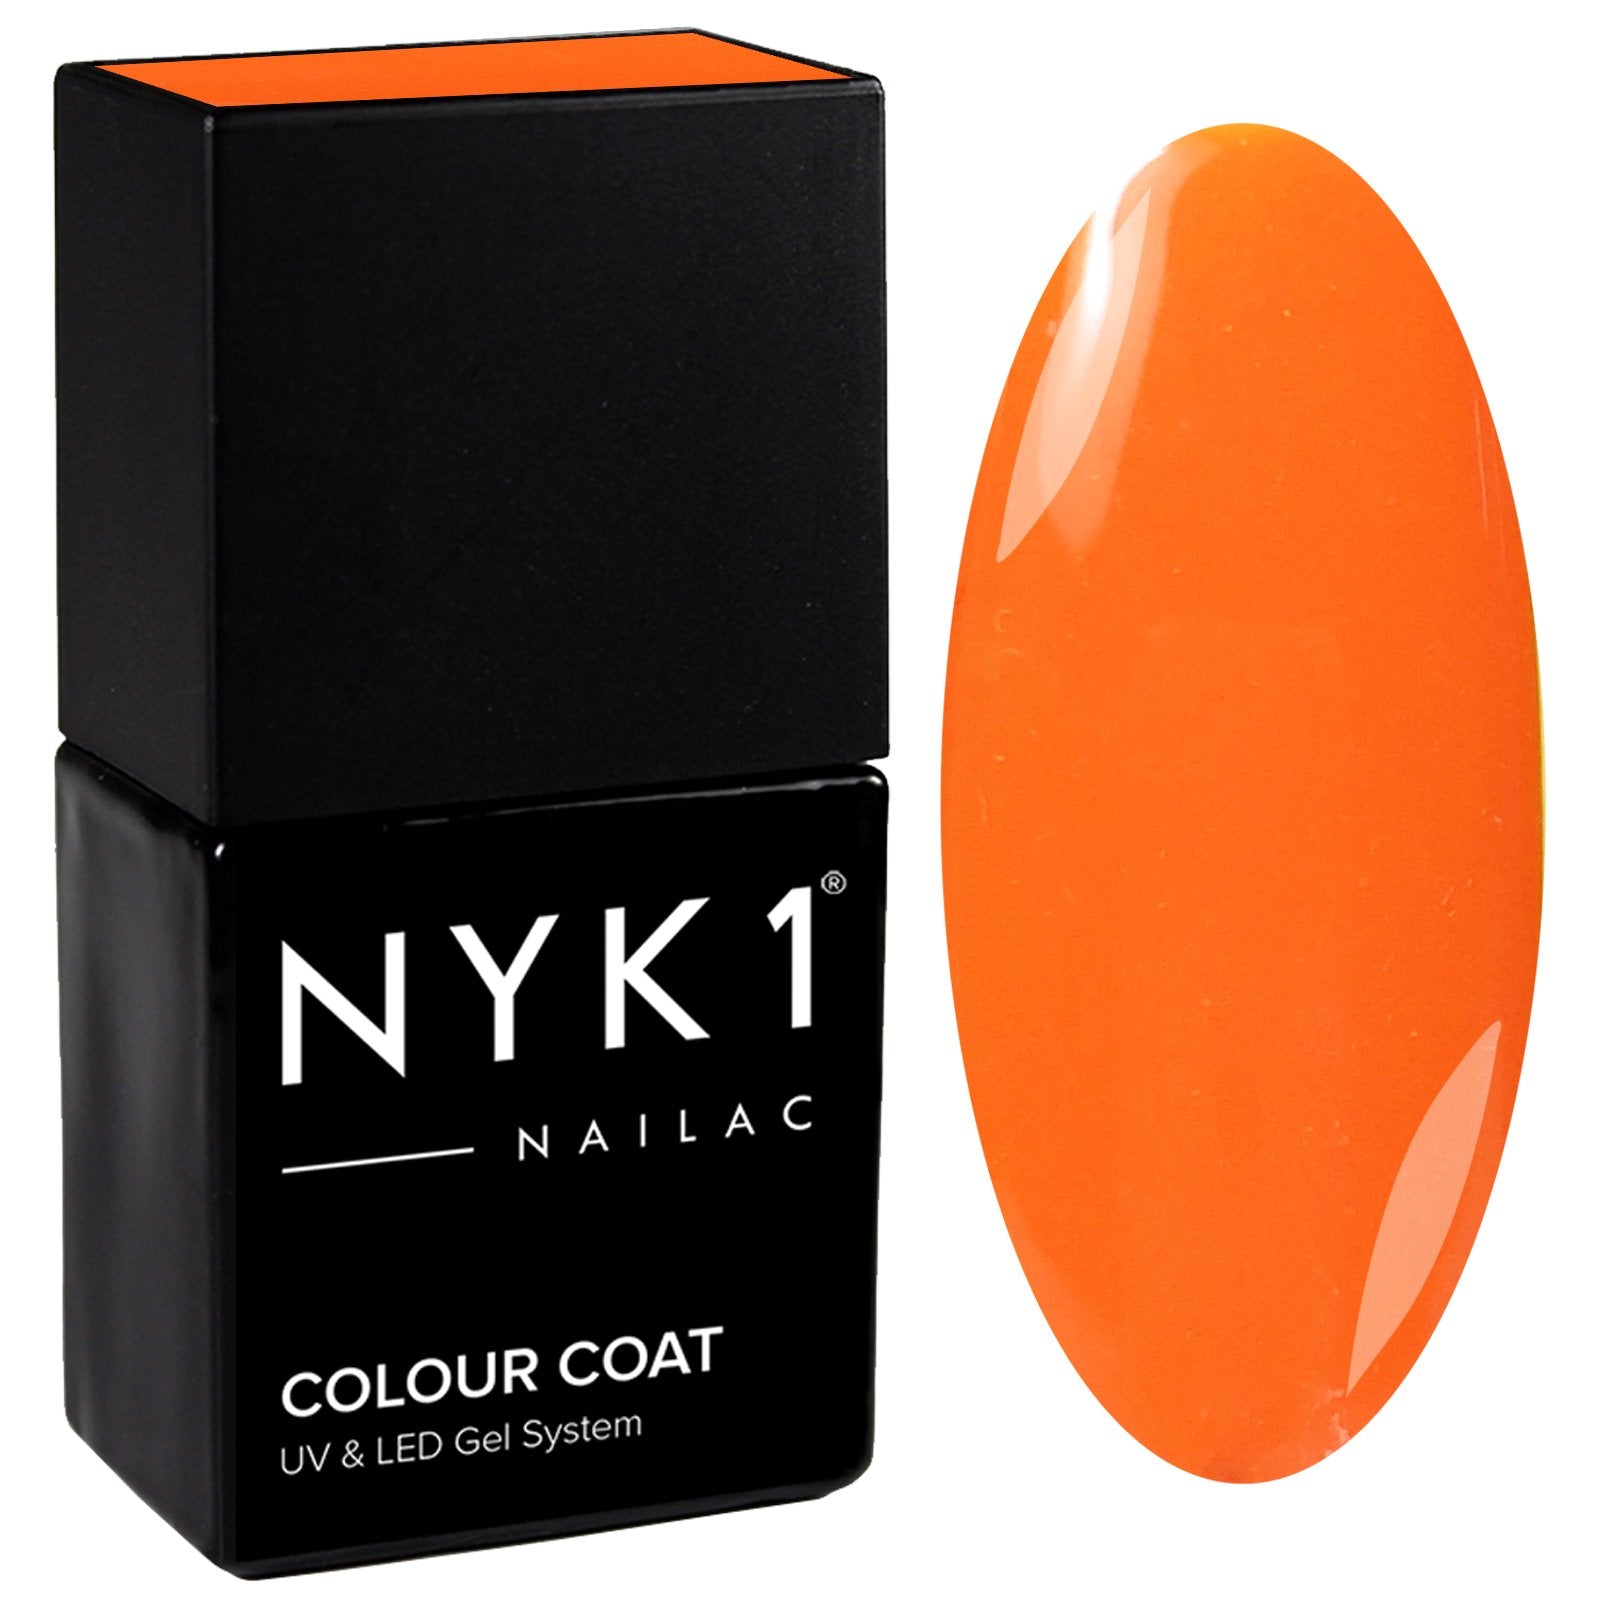 NYK1 Nailac Passion Fruit Bright Orange Gel Nail Polish